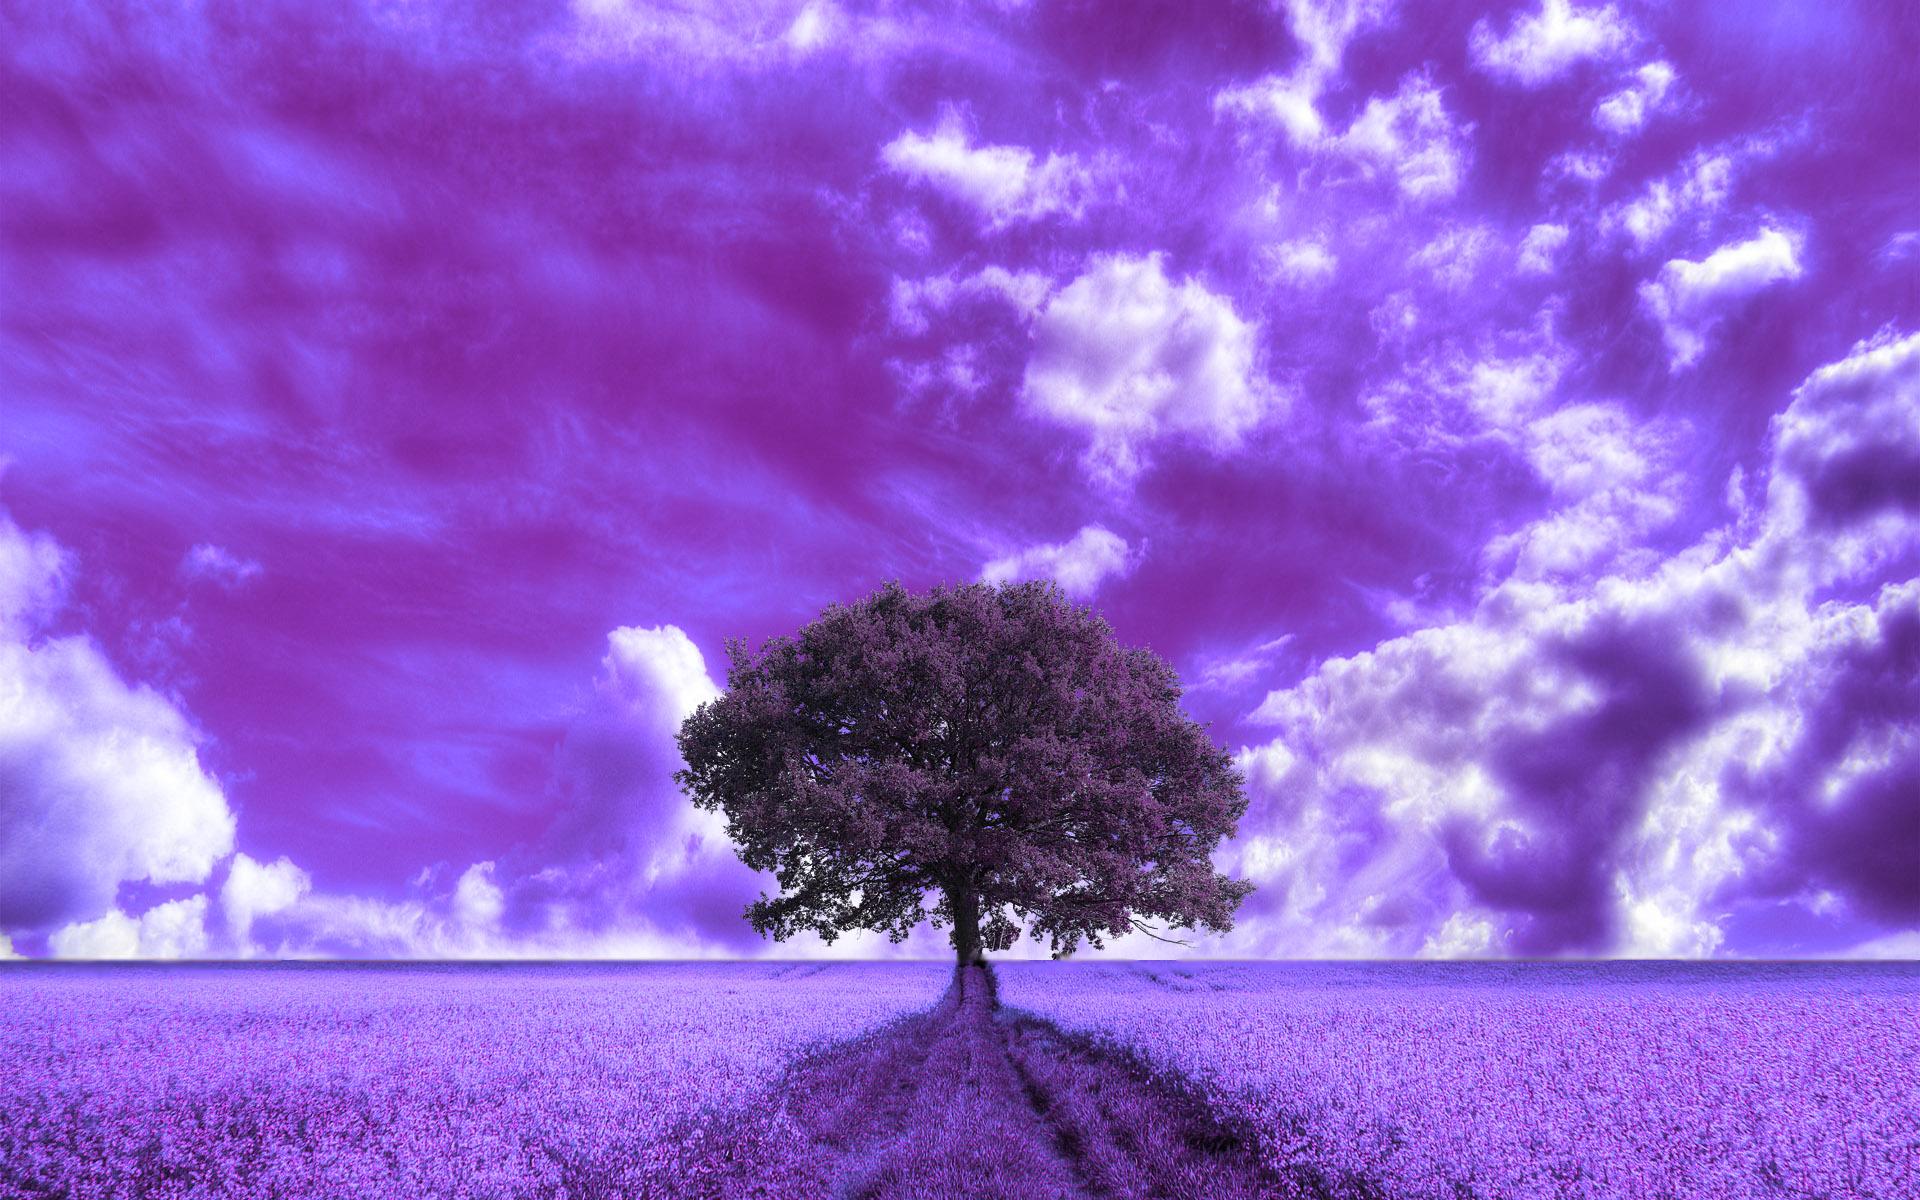 577258 Purple Cloud Images Stock Photos  Vectors  Shutterstock